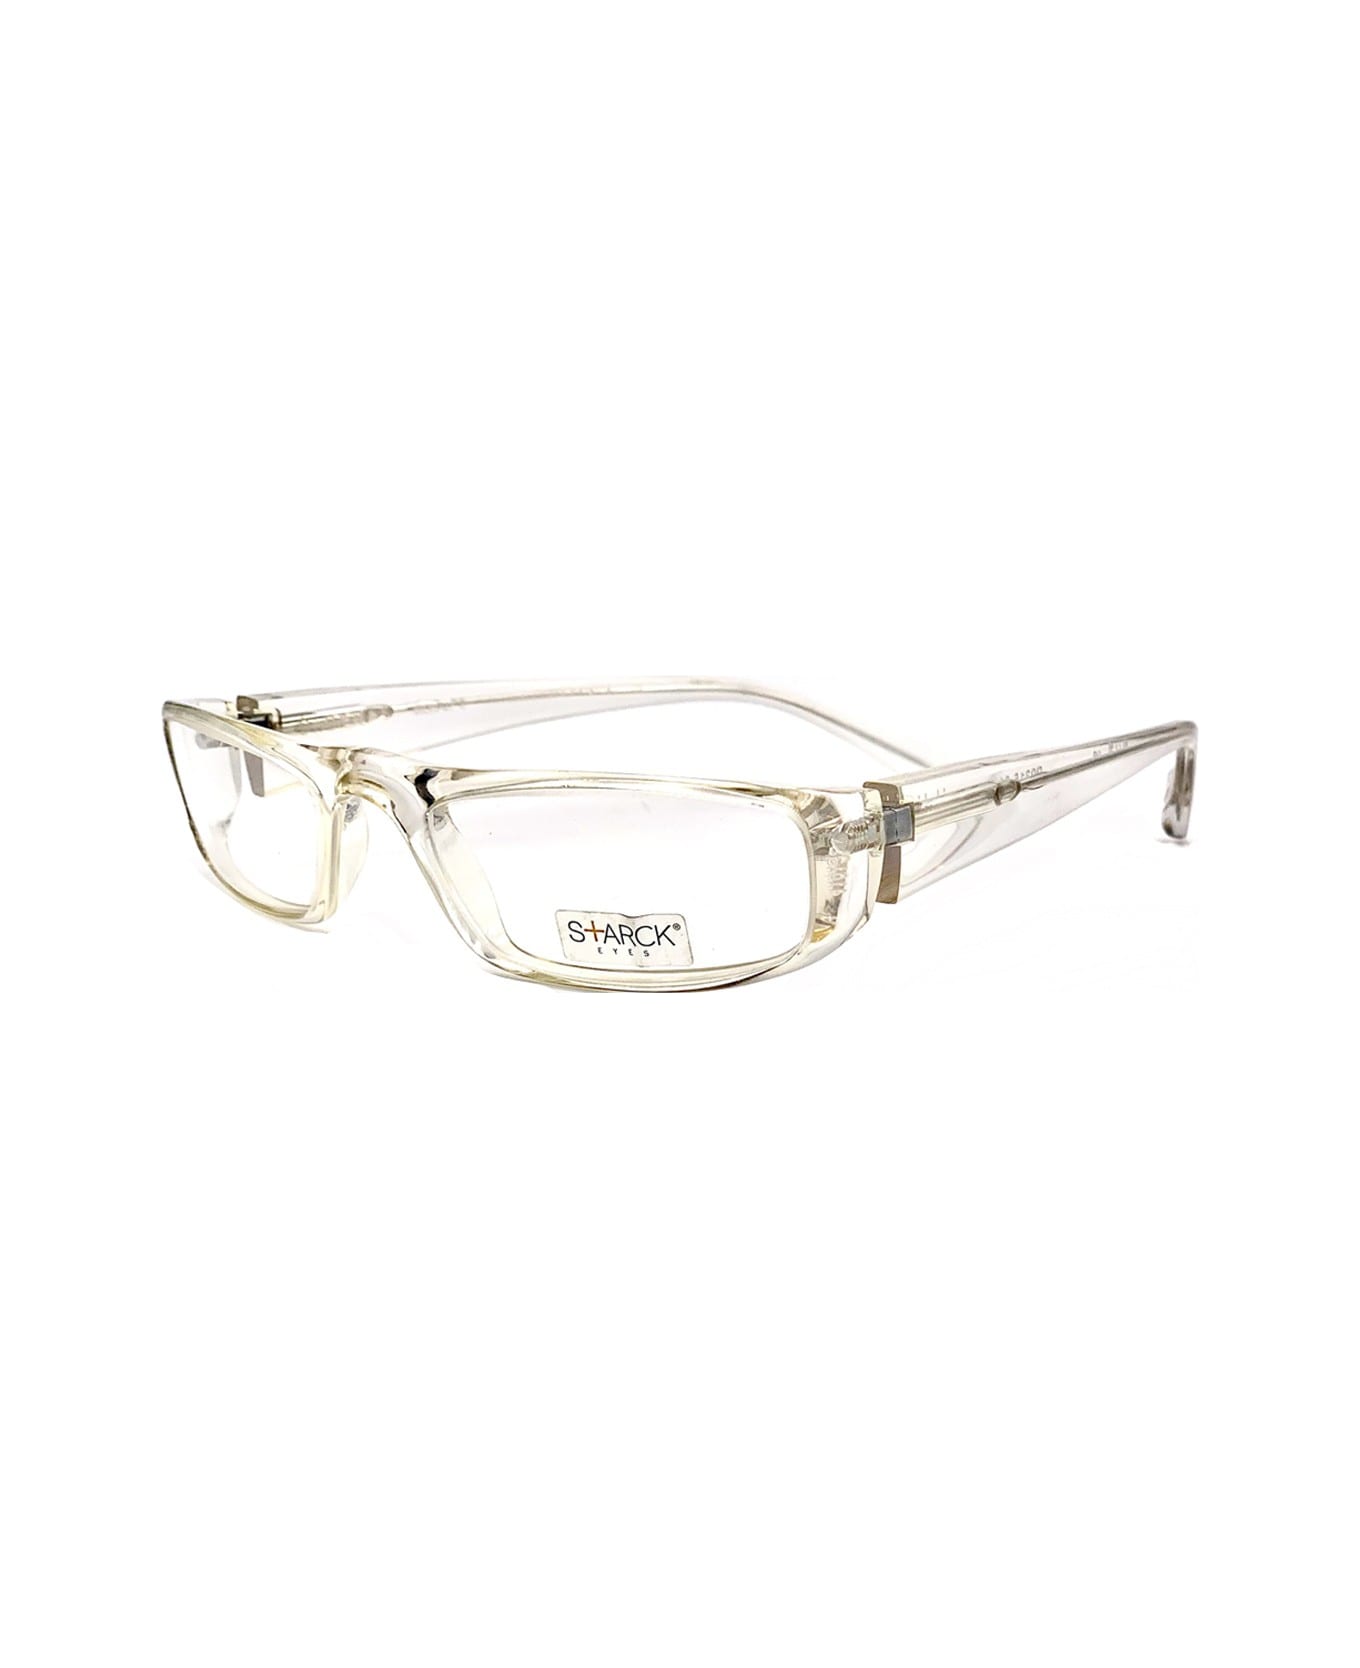 Philippe Starck Po315 Glasses - Beige